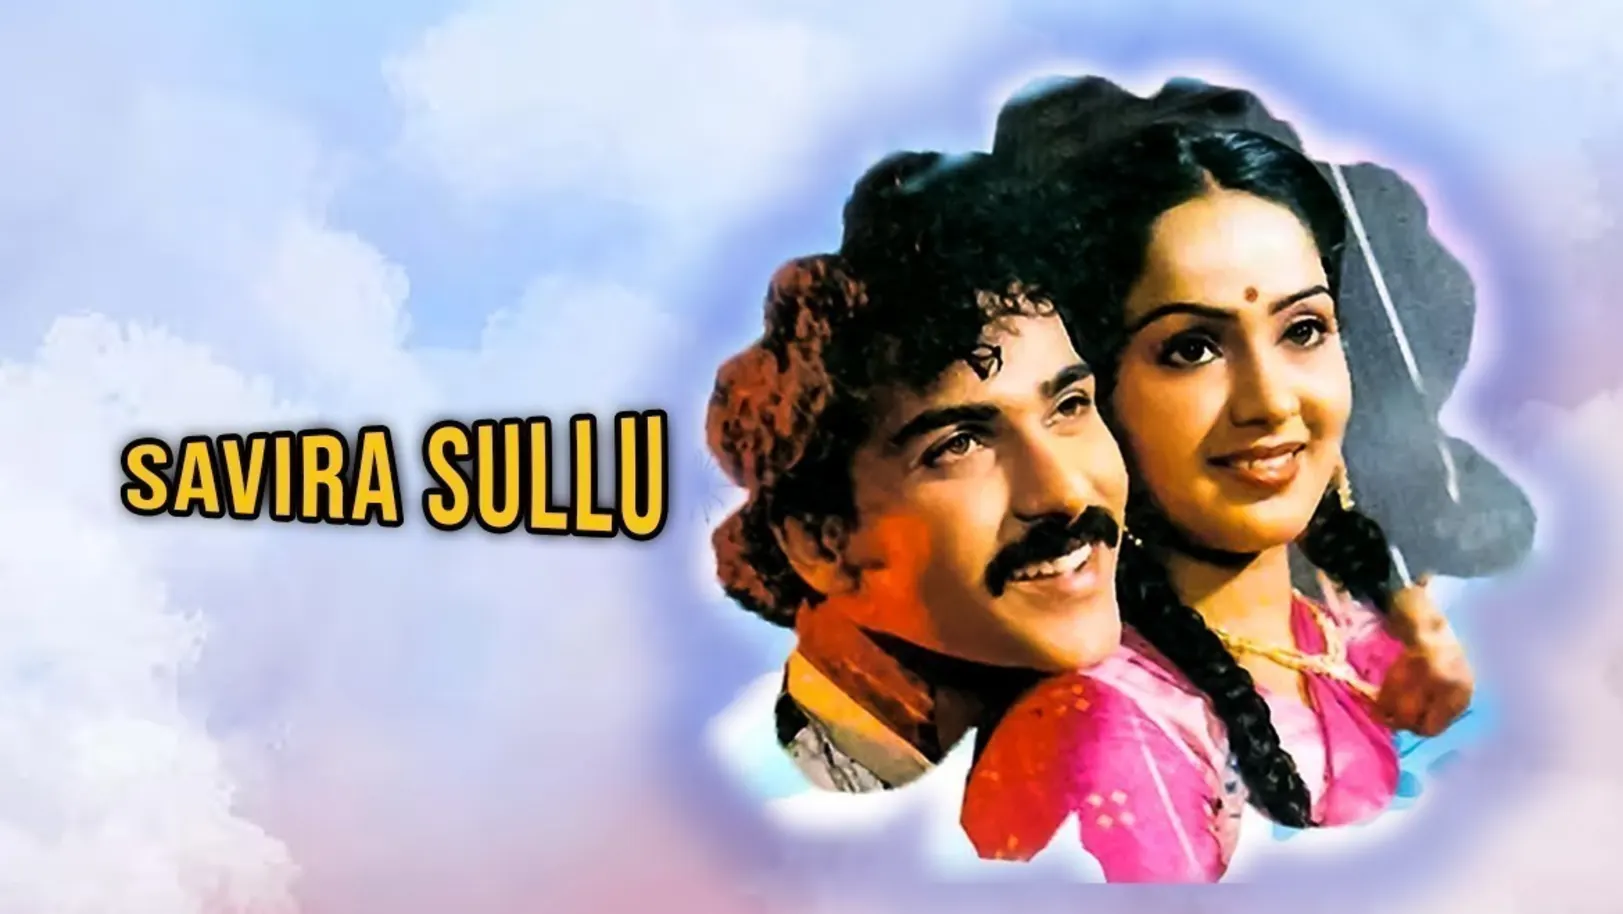 Savira Sullu Movie